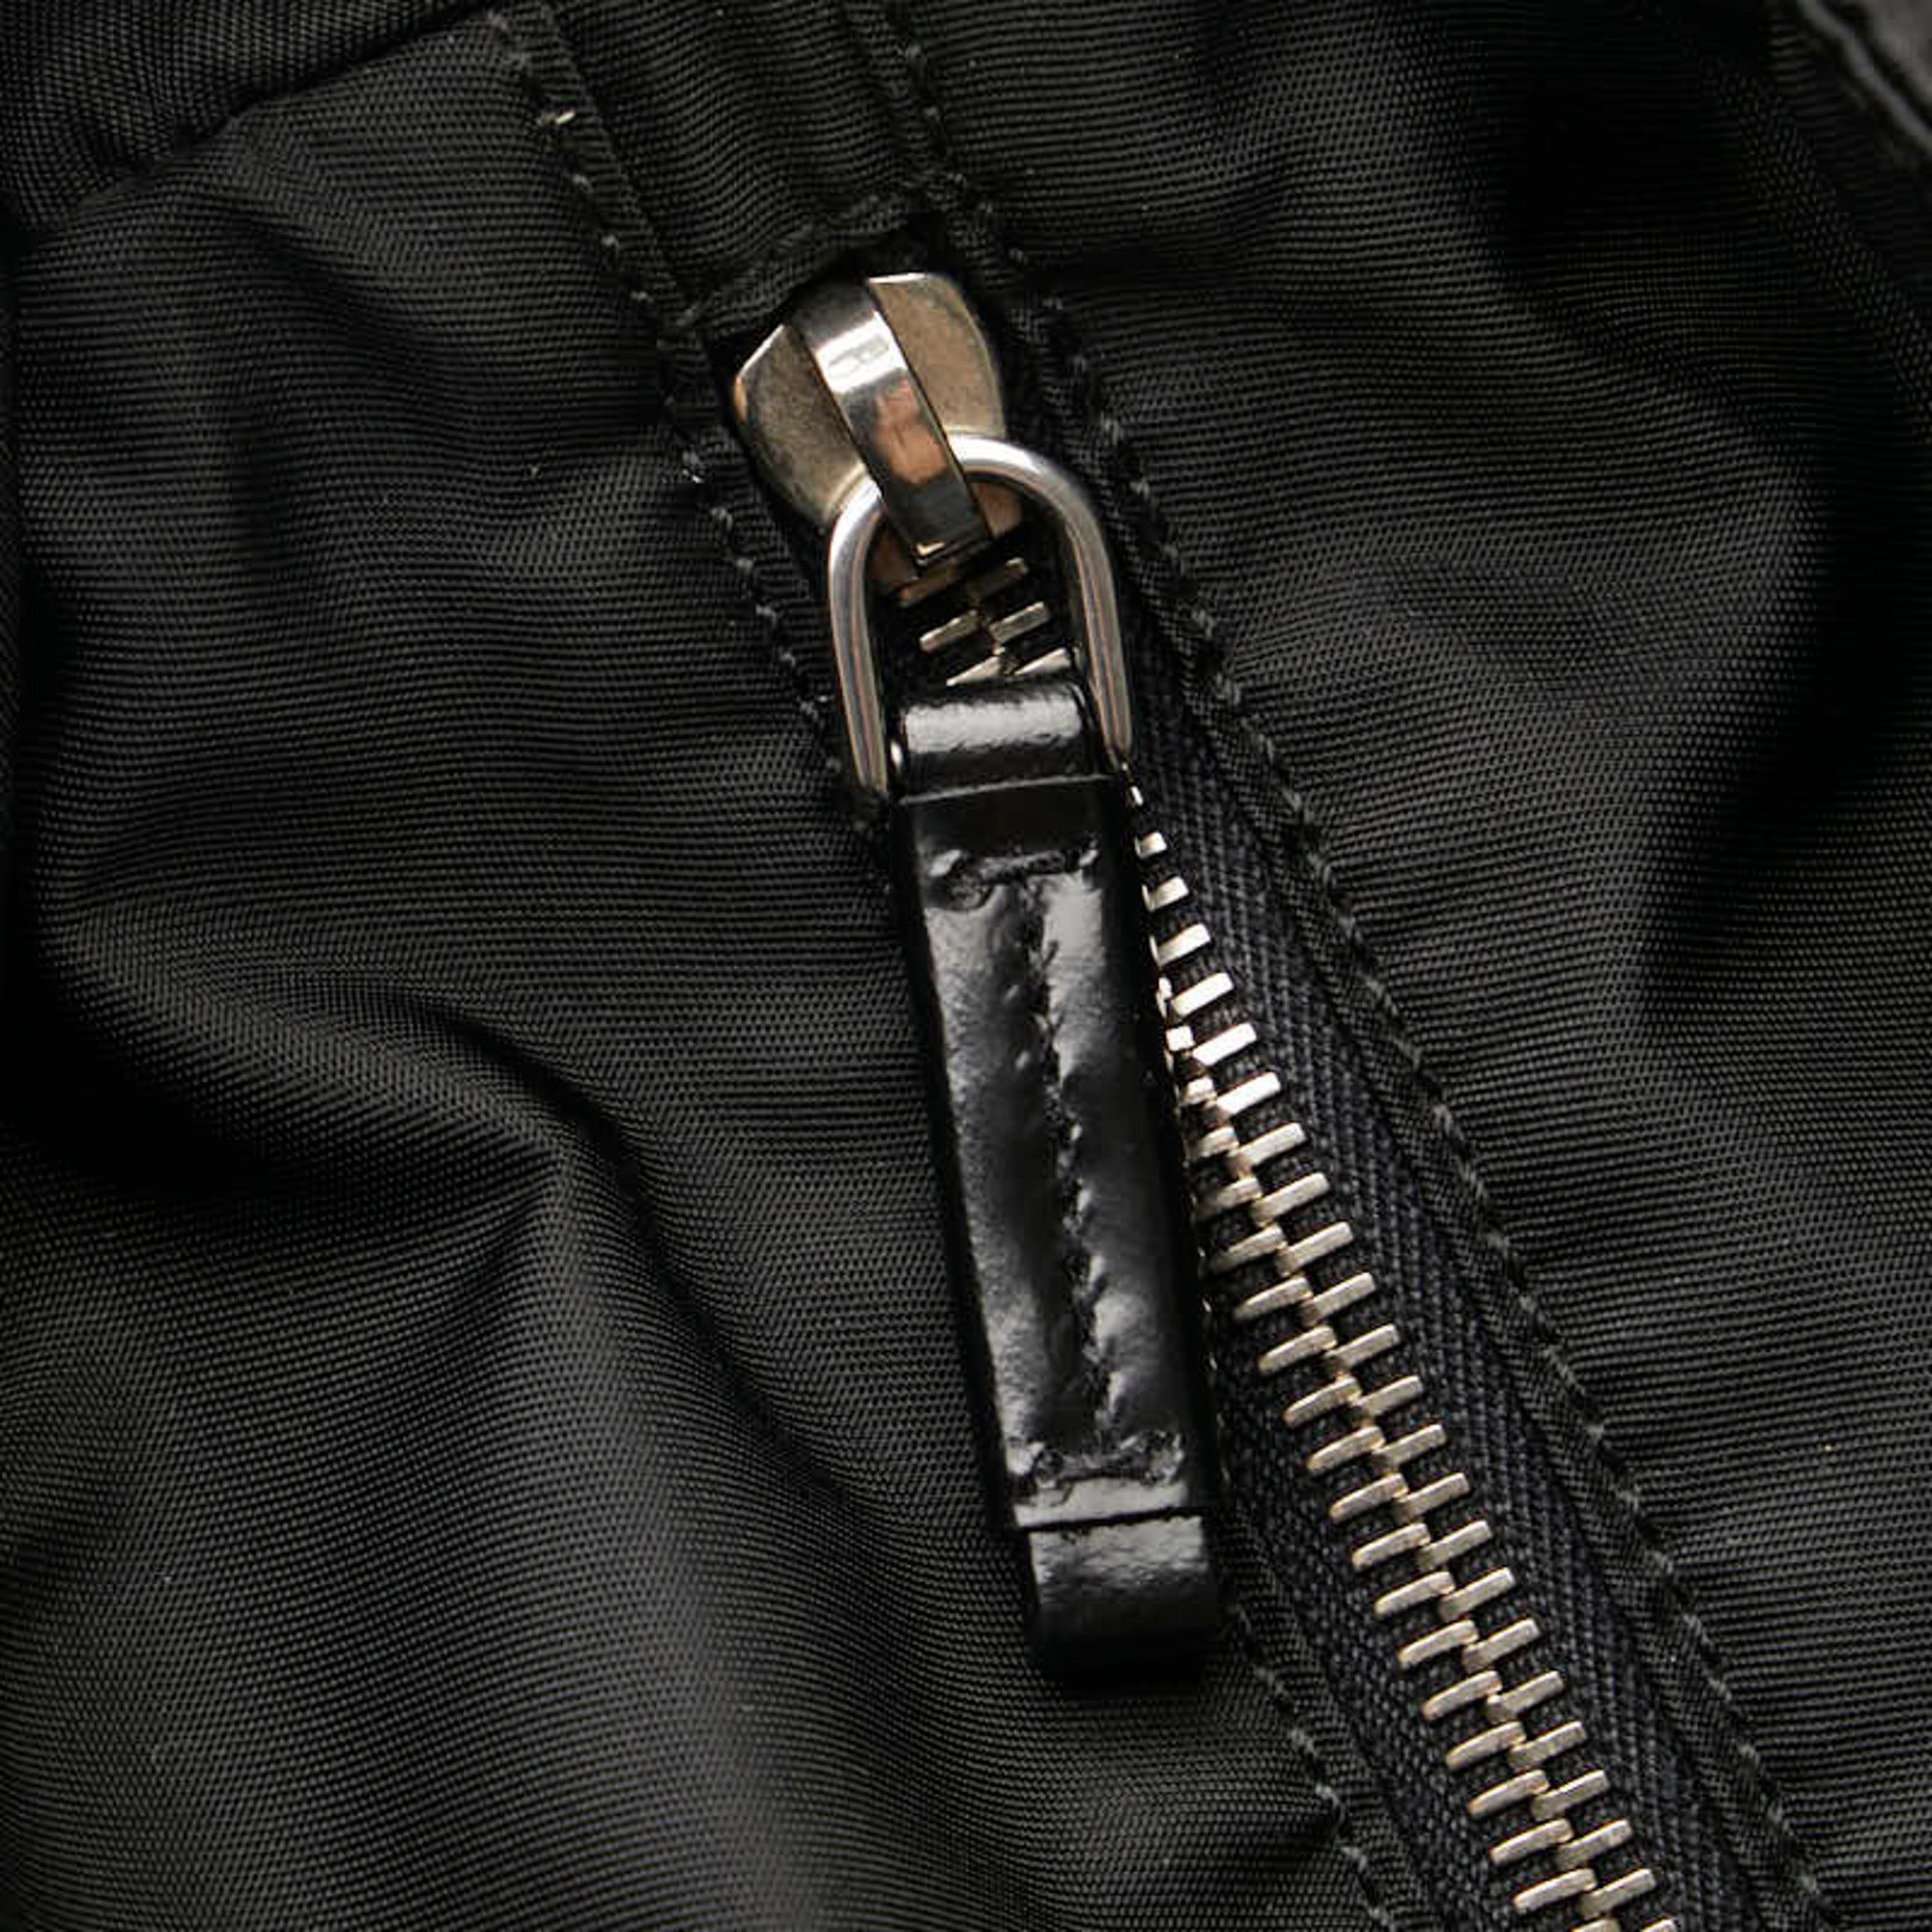 Prada Tote Bag Shoulder Black Nylon Leather Women's PRADA